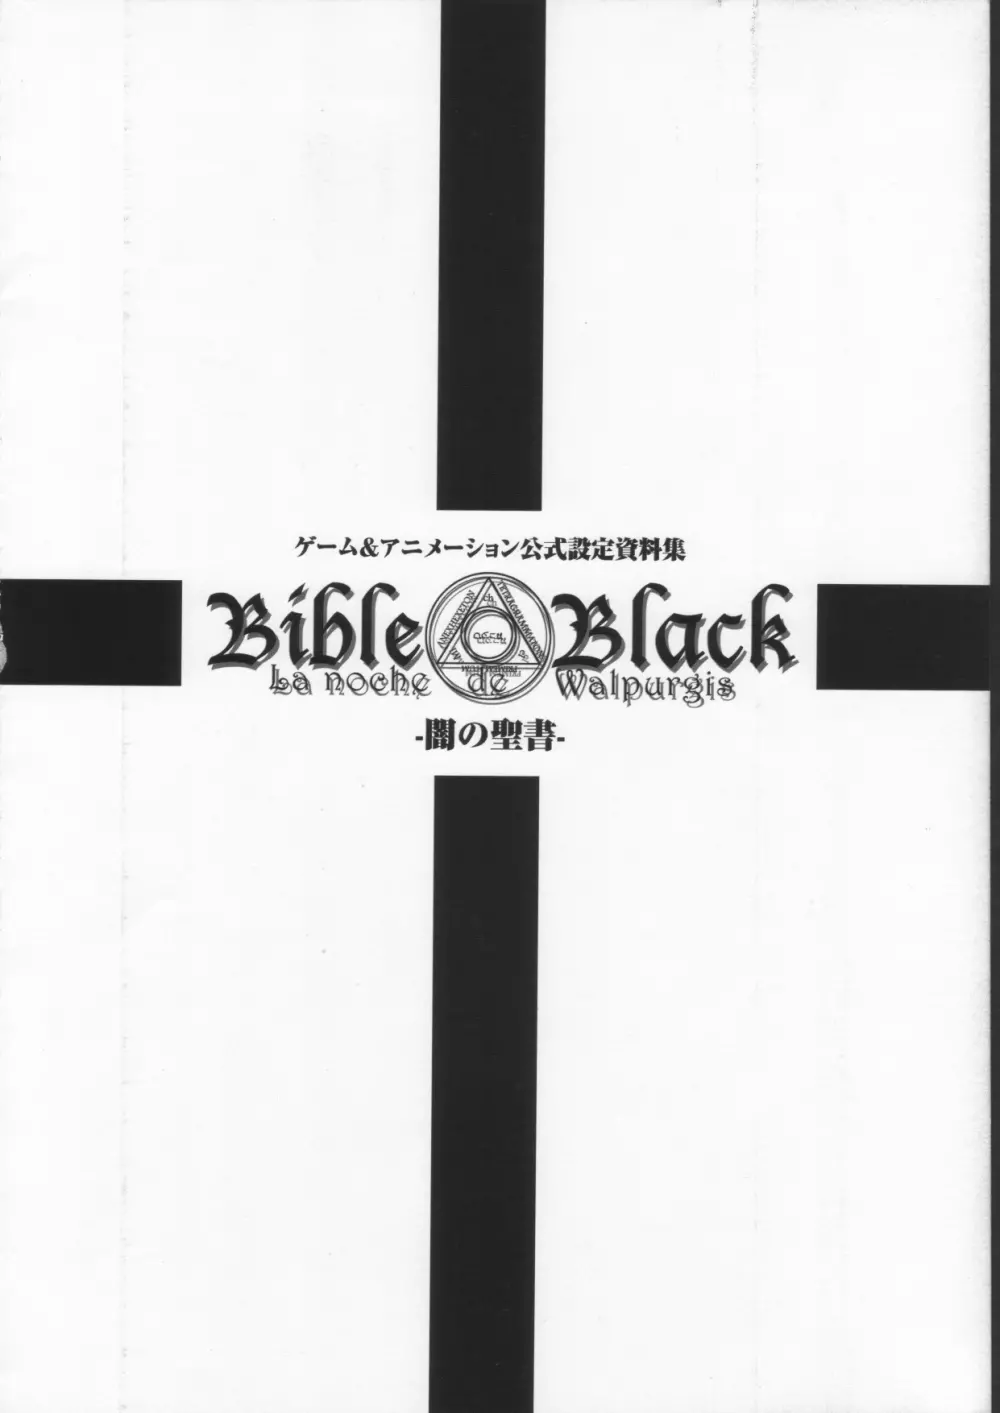 BibleBlack バイブルブラック ゲーム&アニメーション公式設定資料集 16ページ